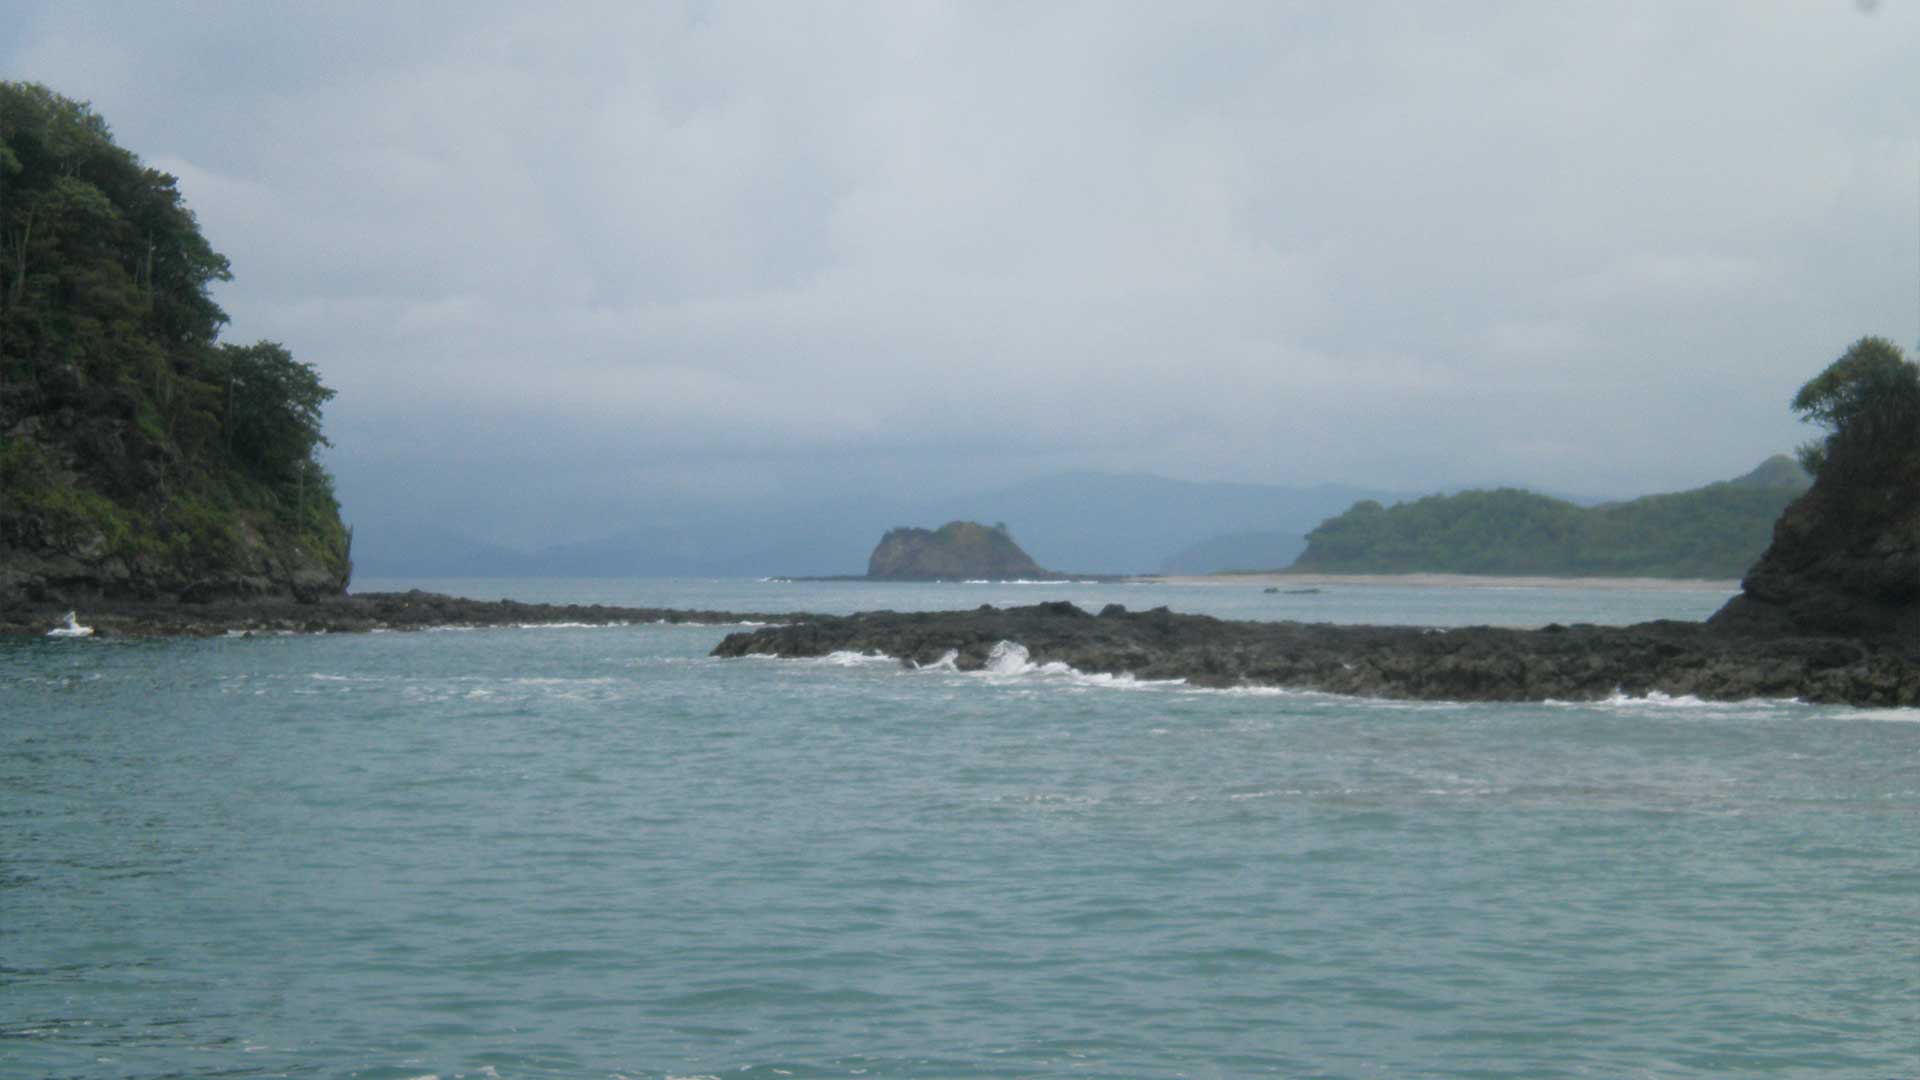 Beach with rocky islands in Guanacaste, Costa Rica